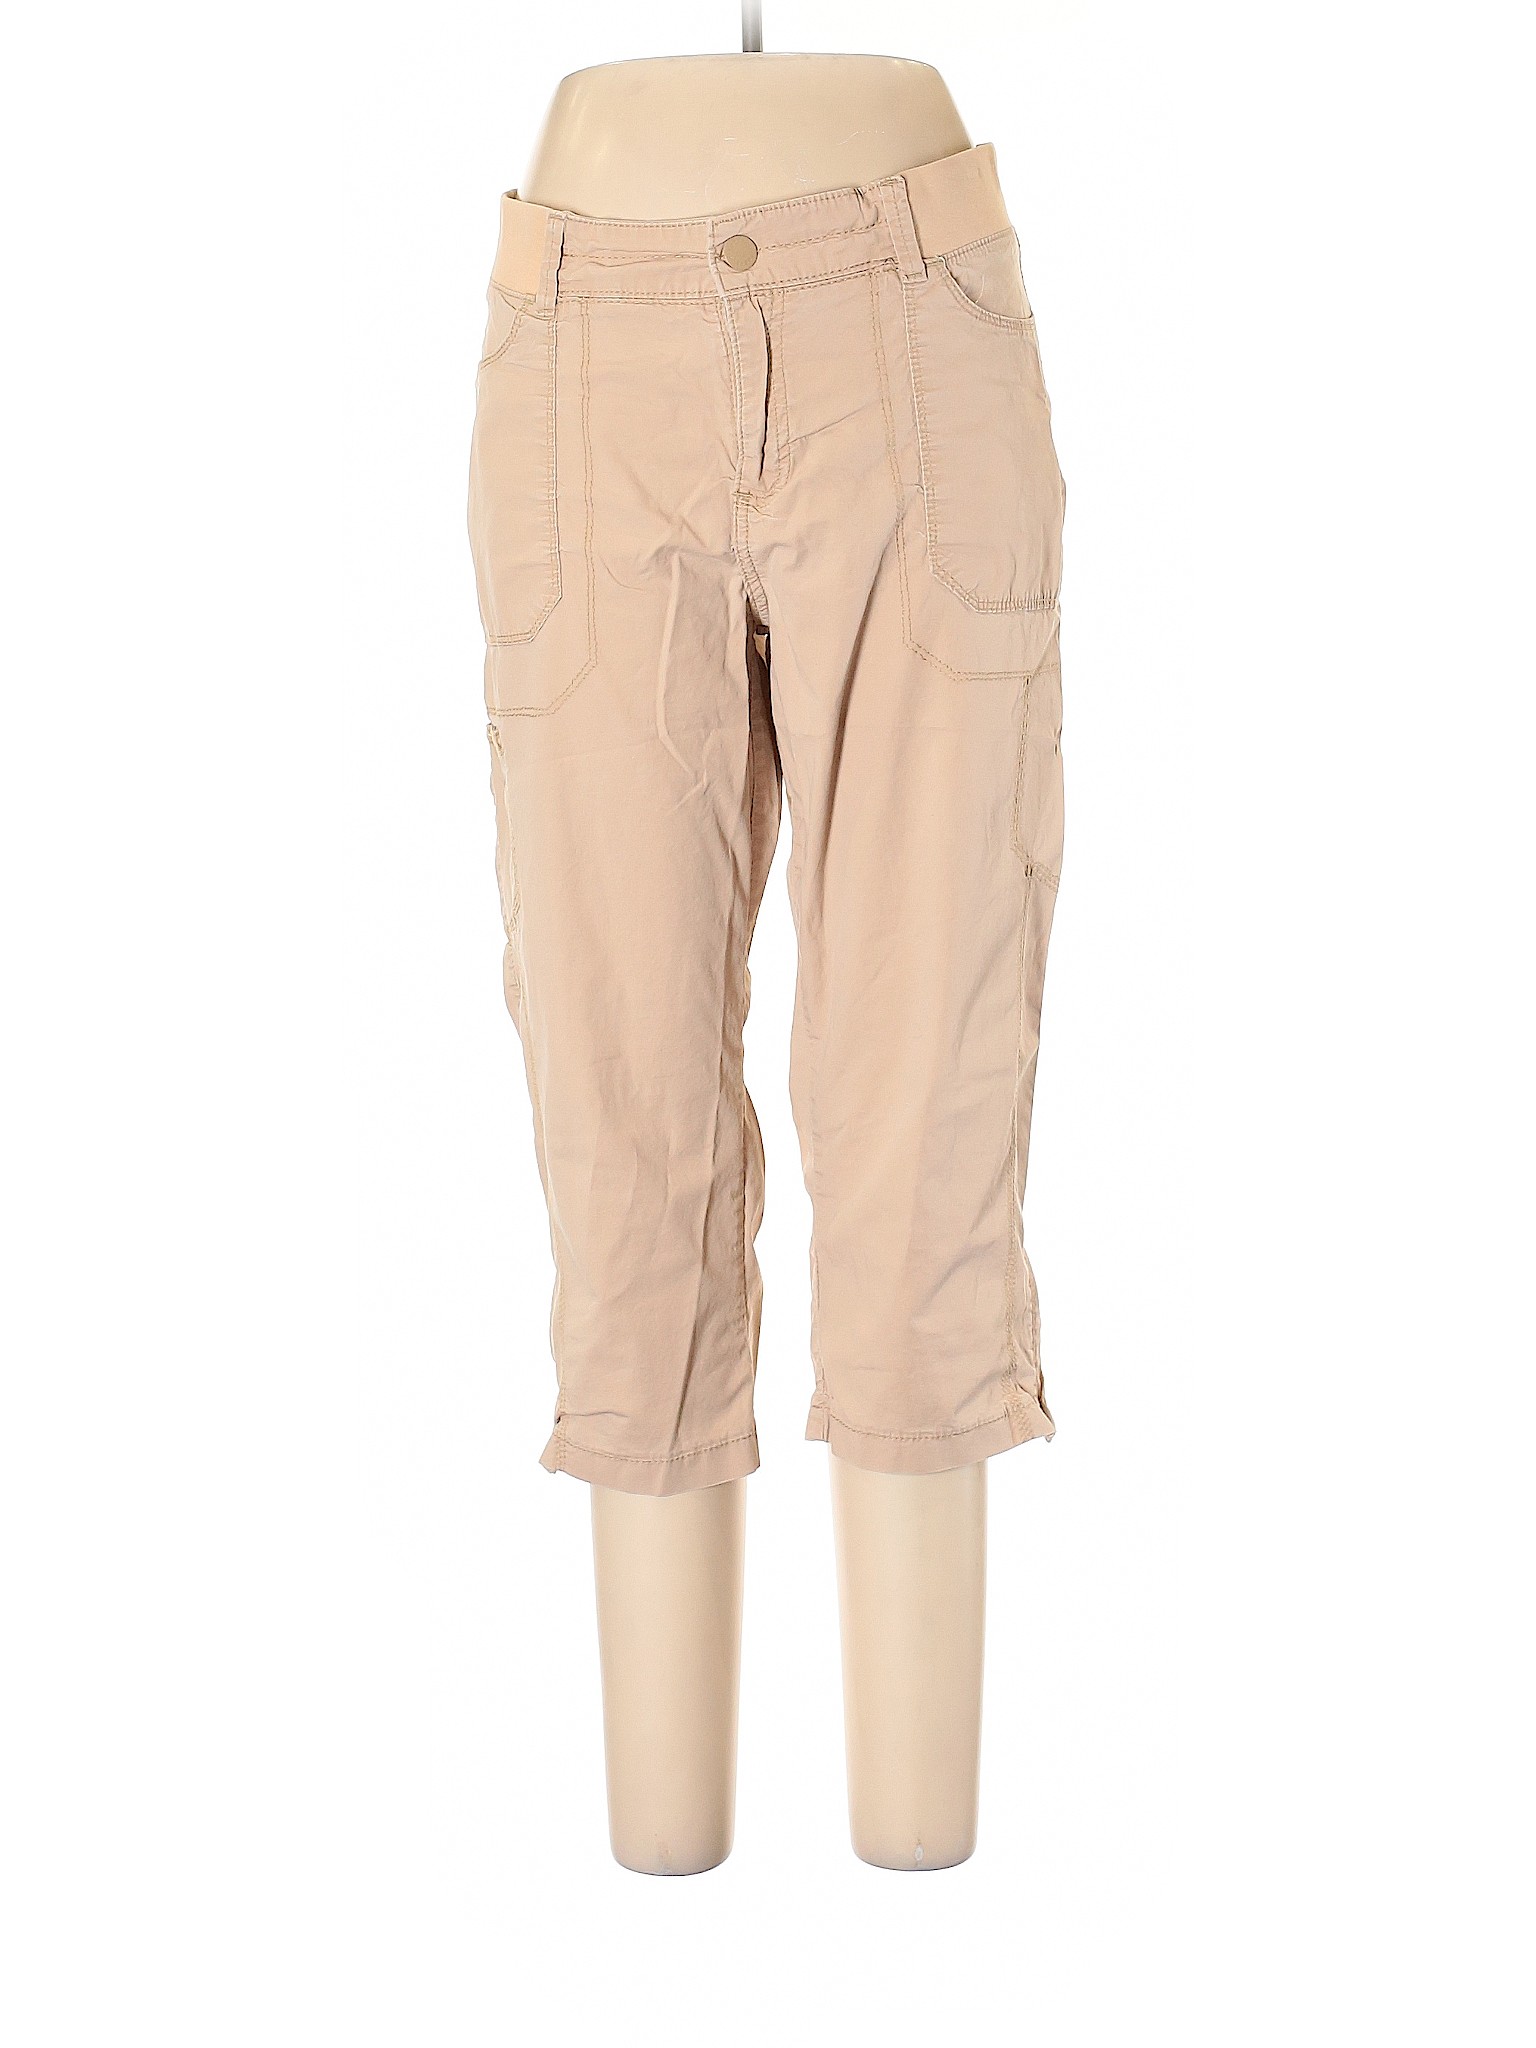 Lee Women Brown Cargo Pants 12 | eBay